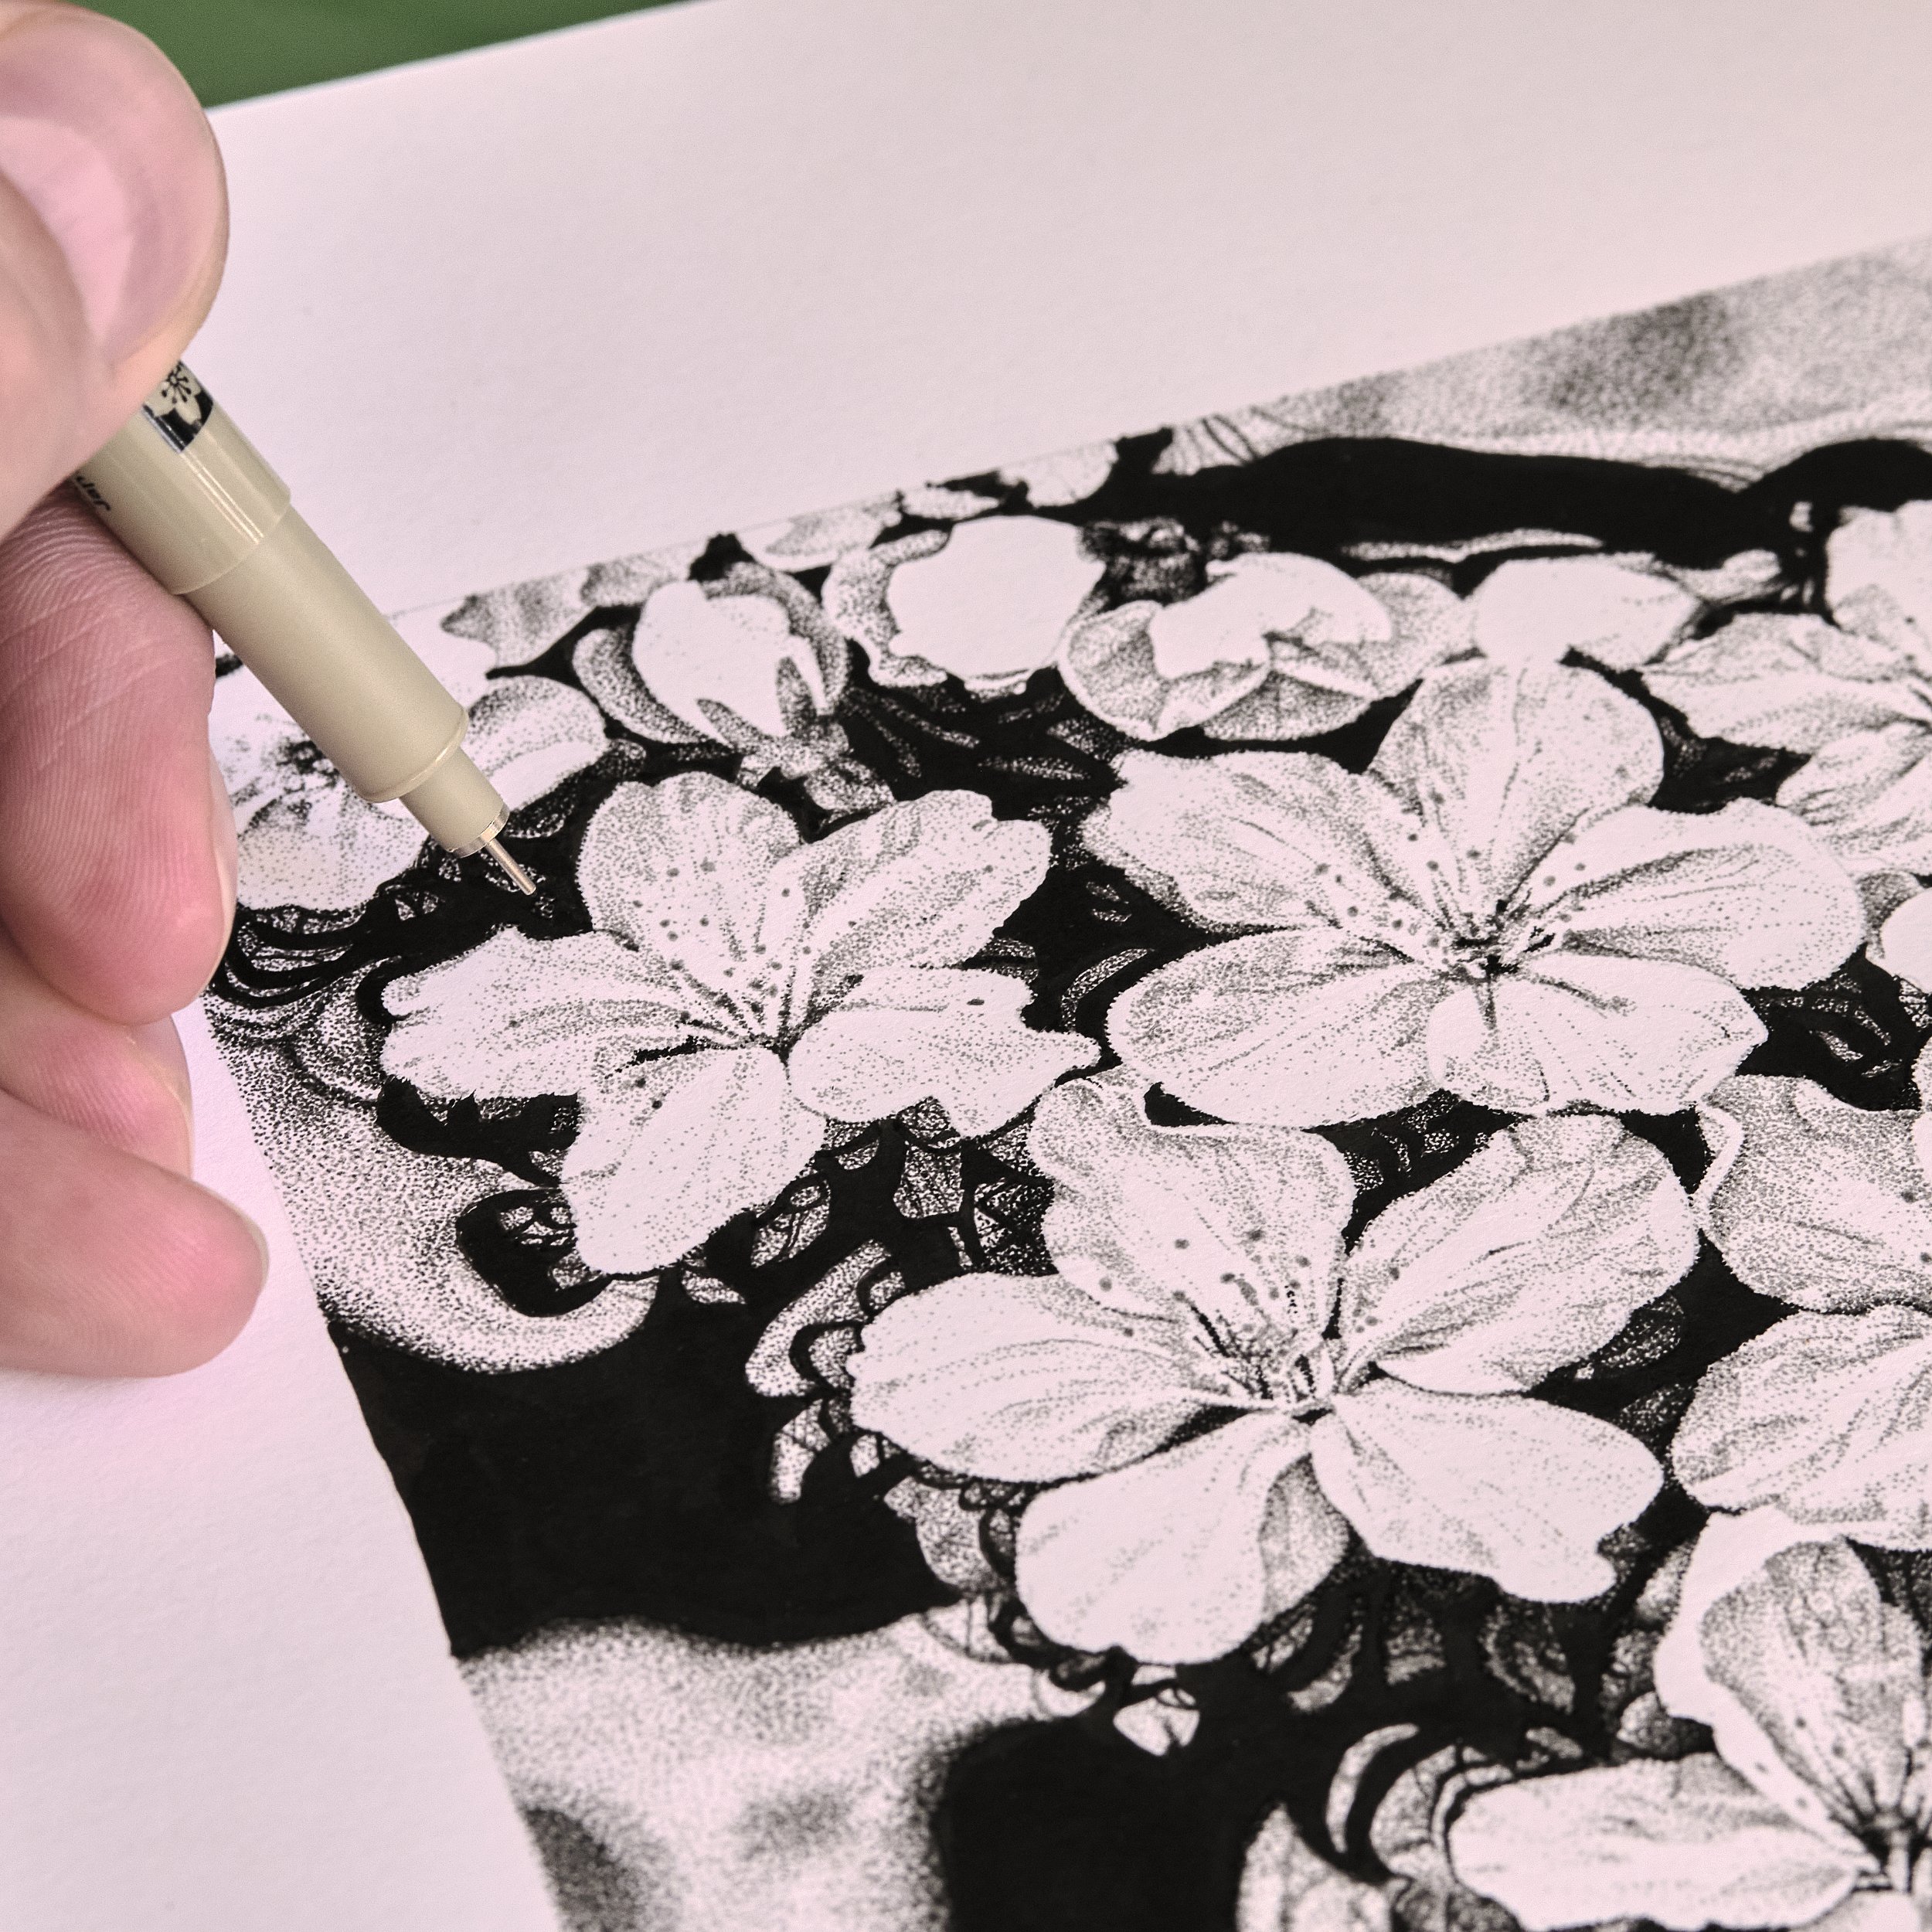 blossoms hand detail desat.jpg